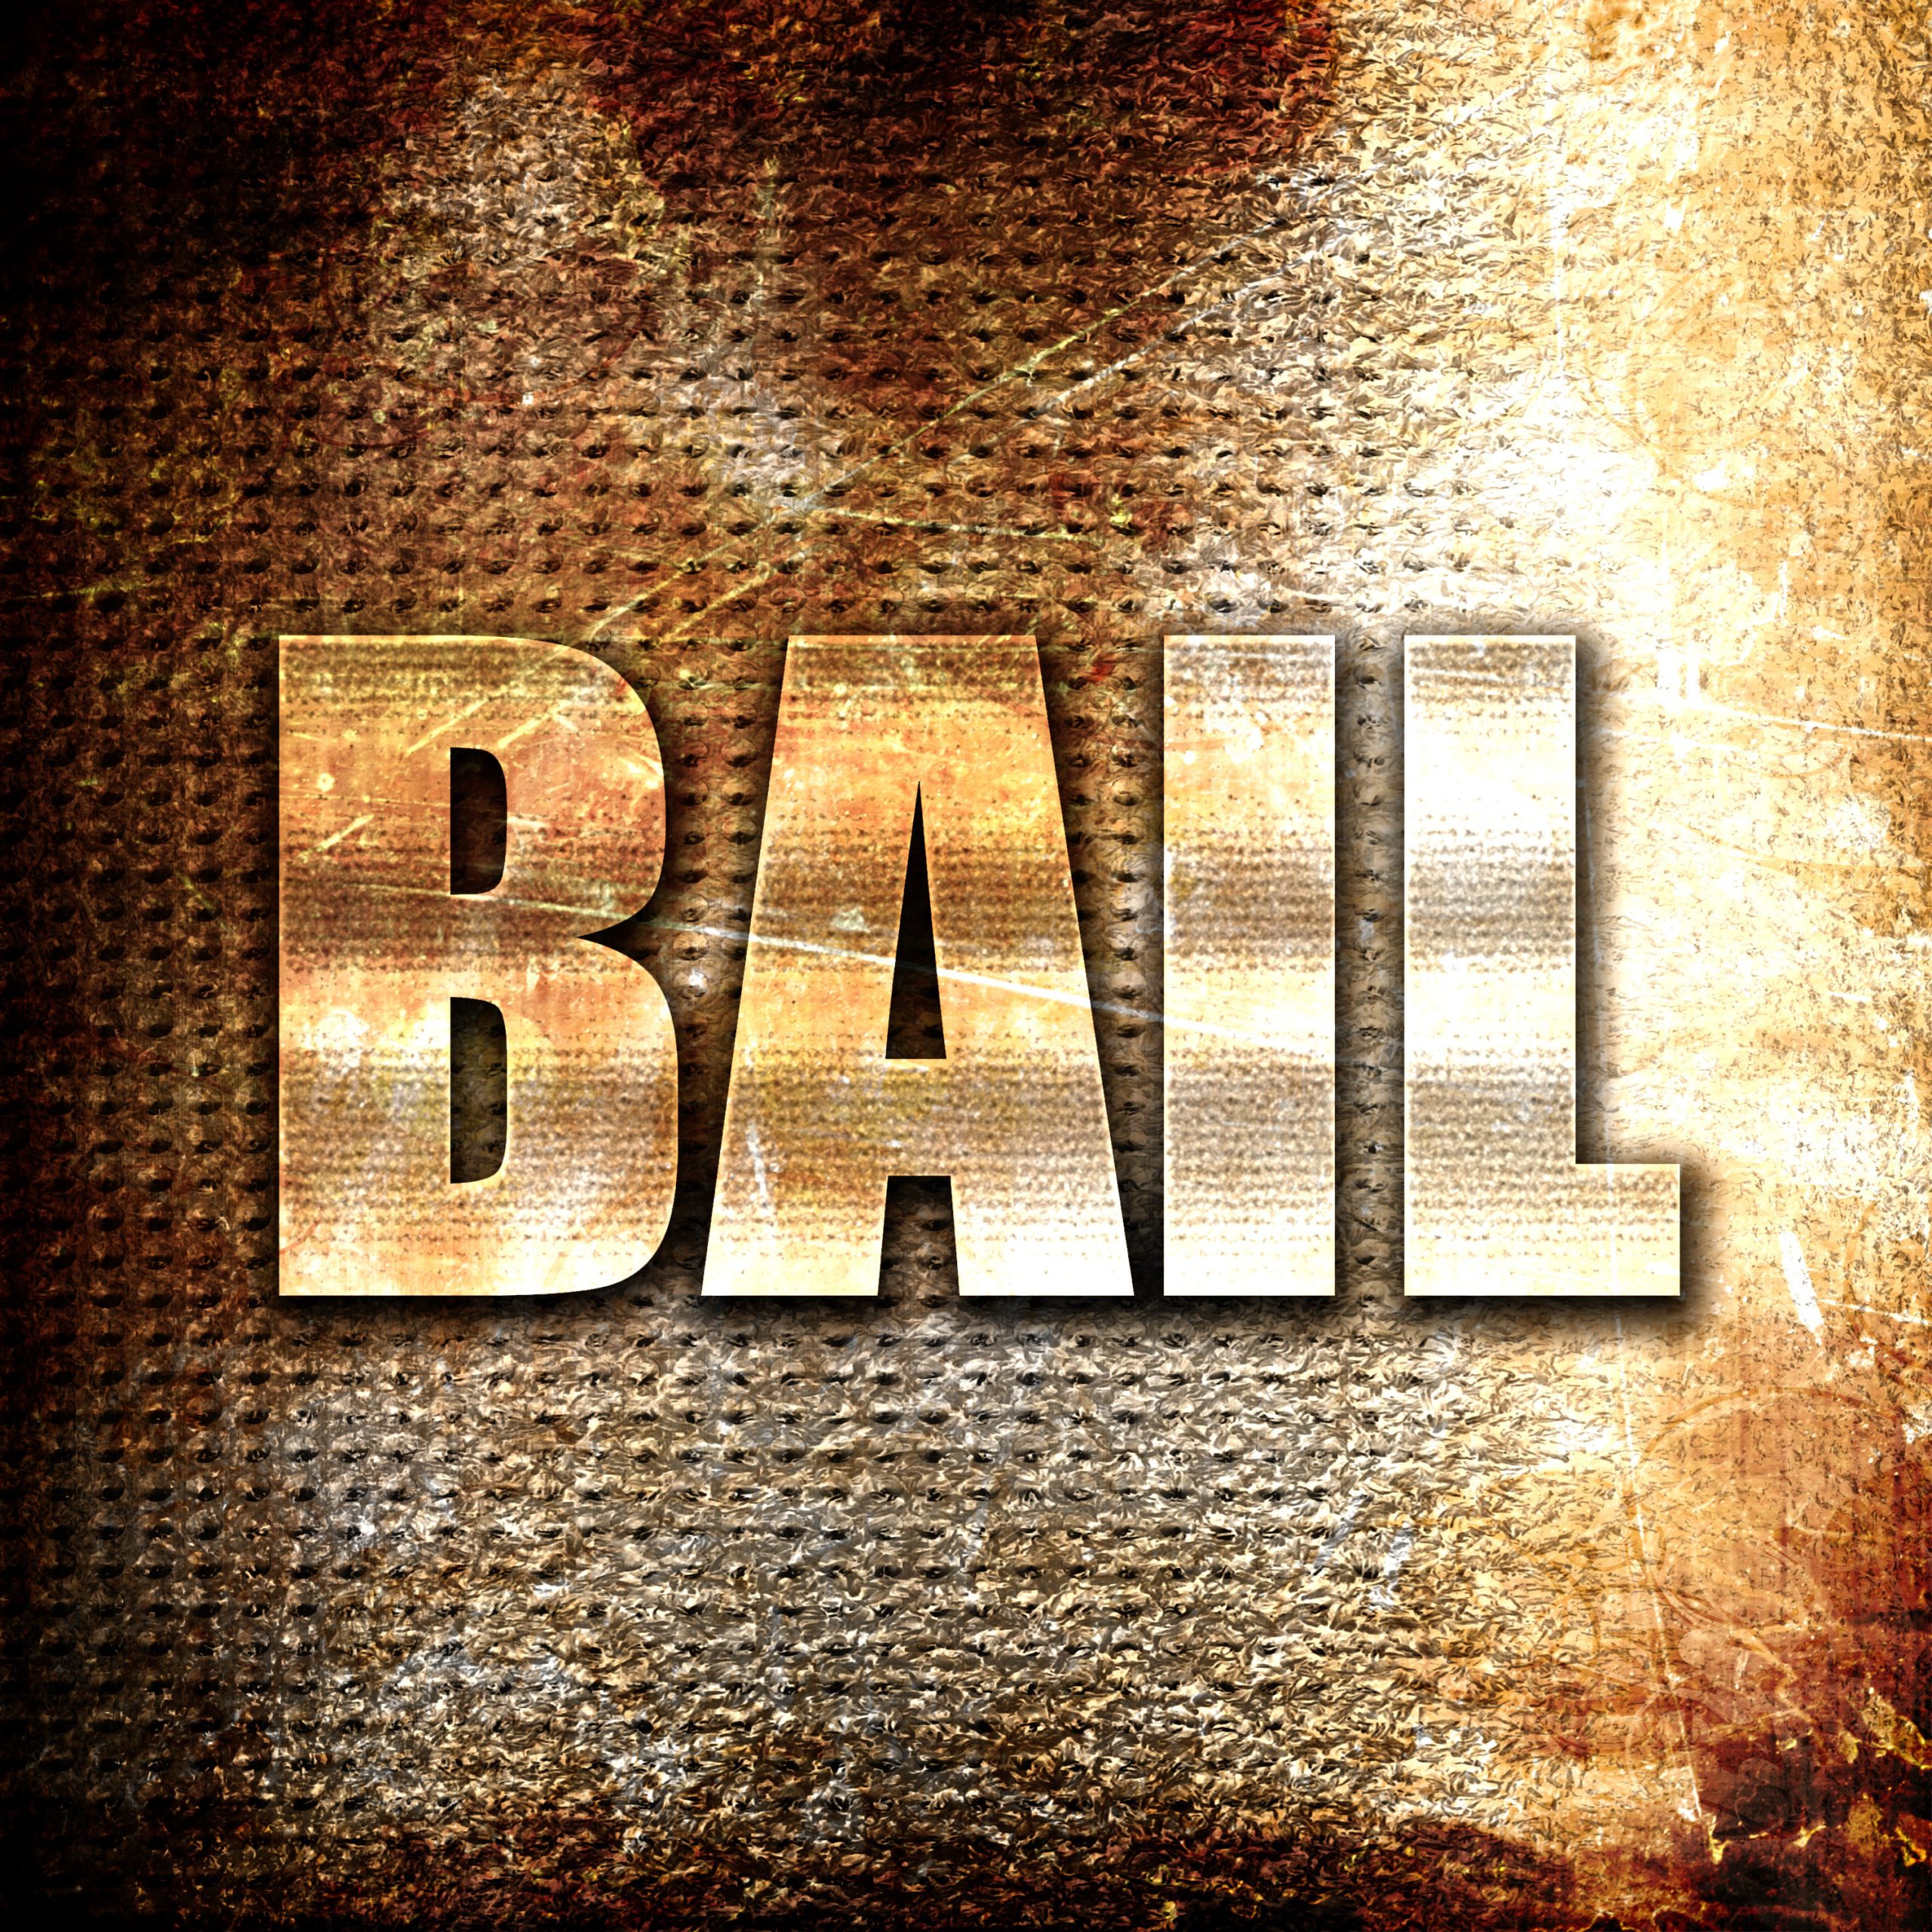 bail, bondsman, crime, arrest, judge, magistrate, surety